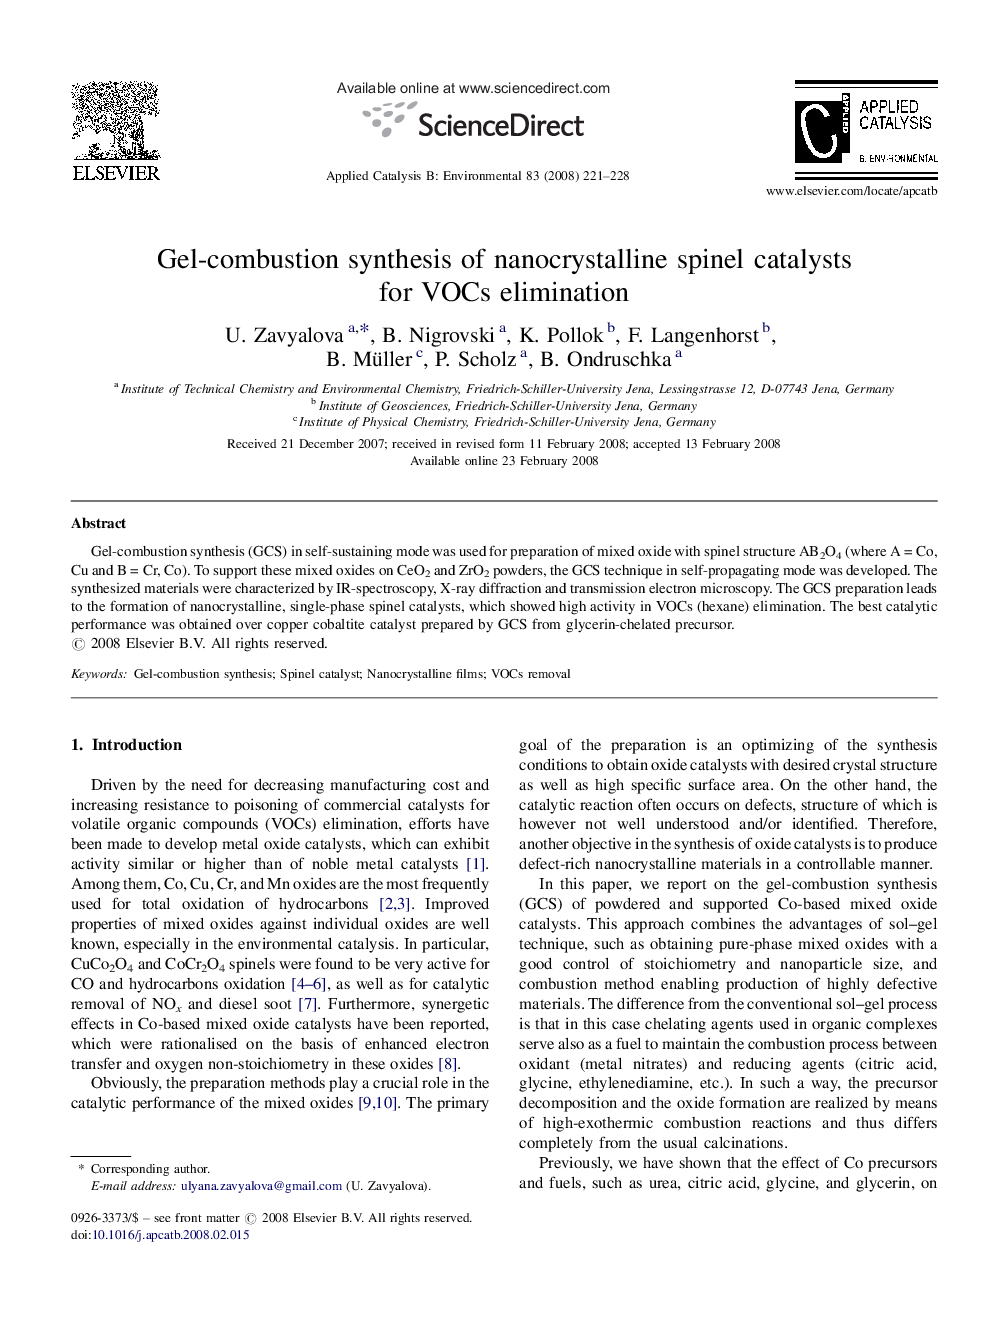 Gel-combustion synthesis of nanocrystalline spinel catalysts for VOCs elimination